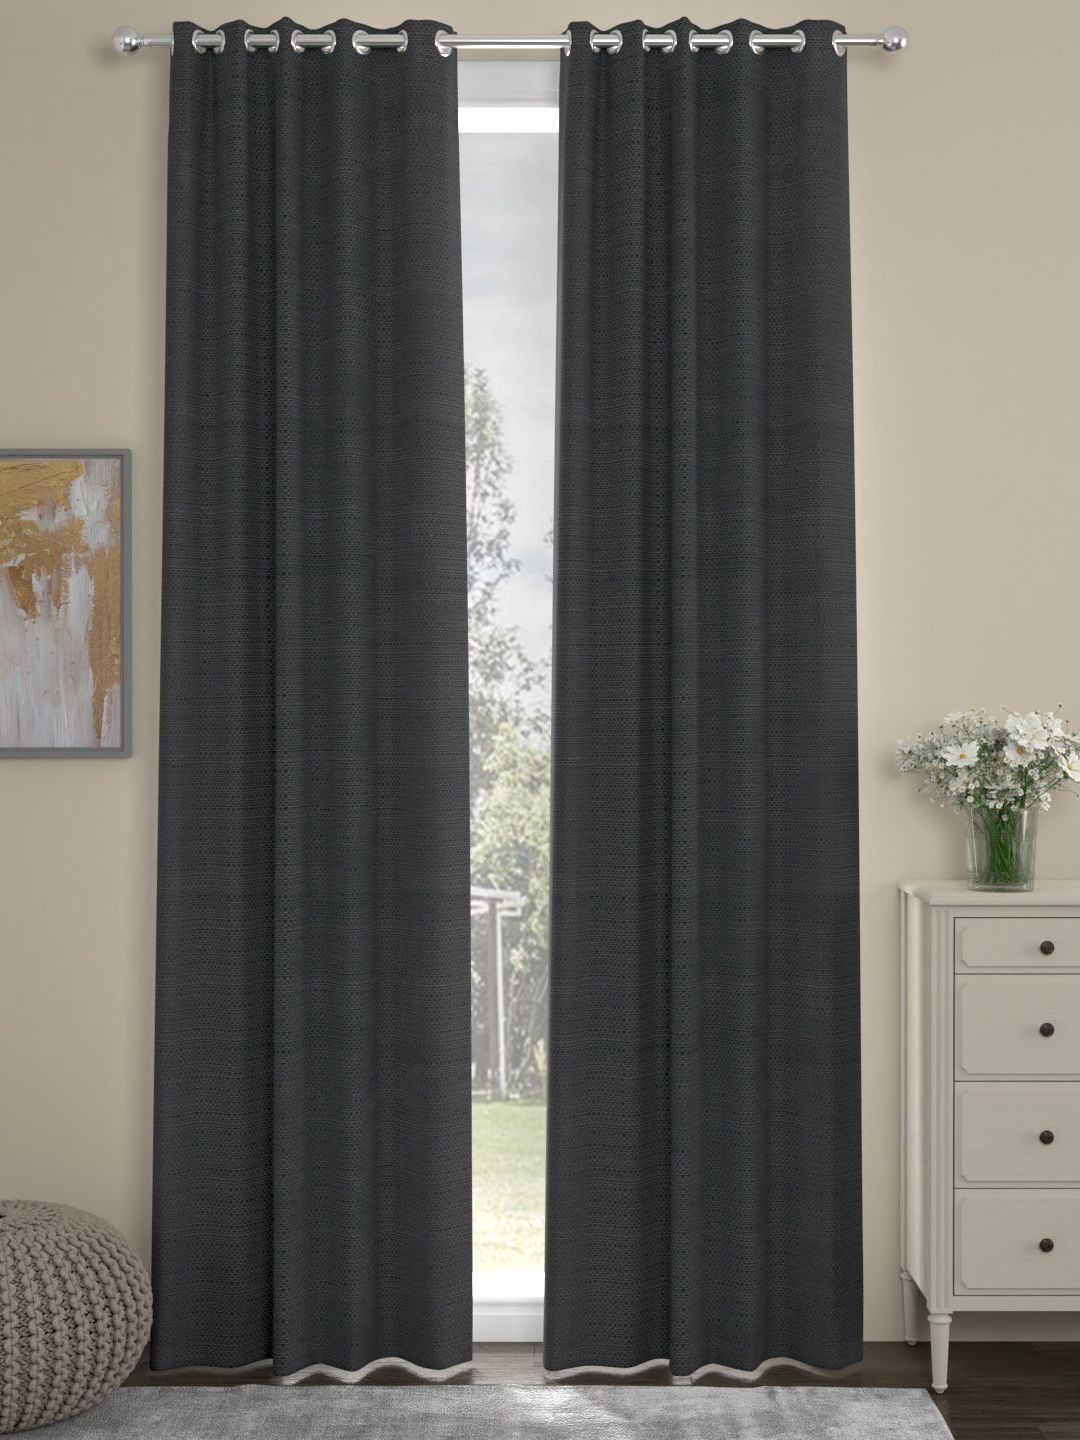 ROSARA HOME Charcoal Single Door Curtain Price in India